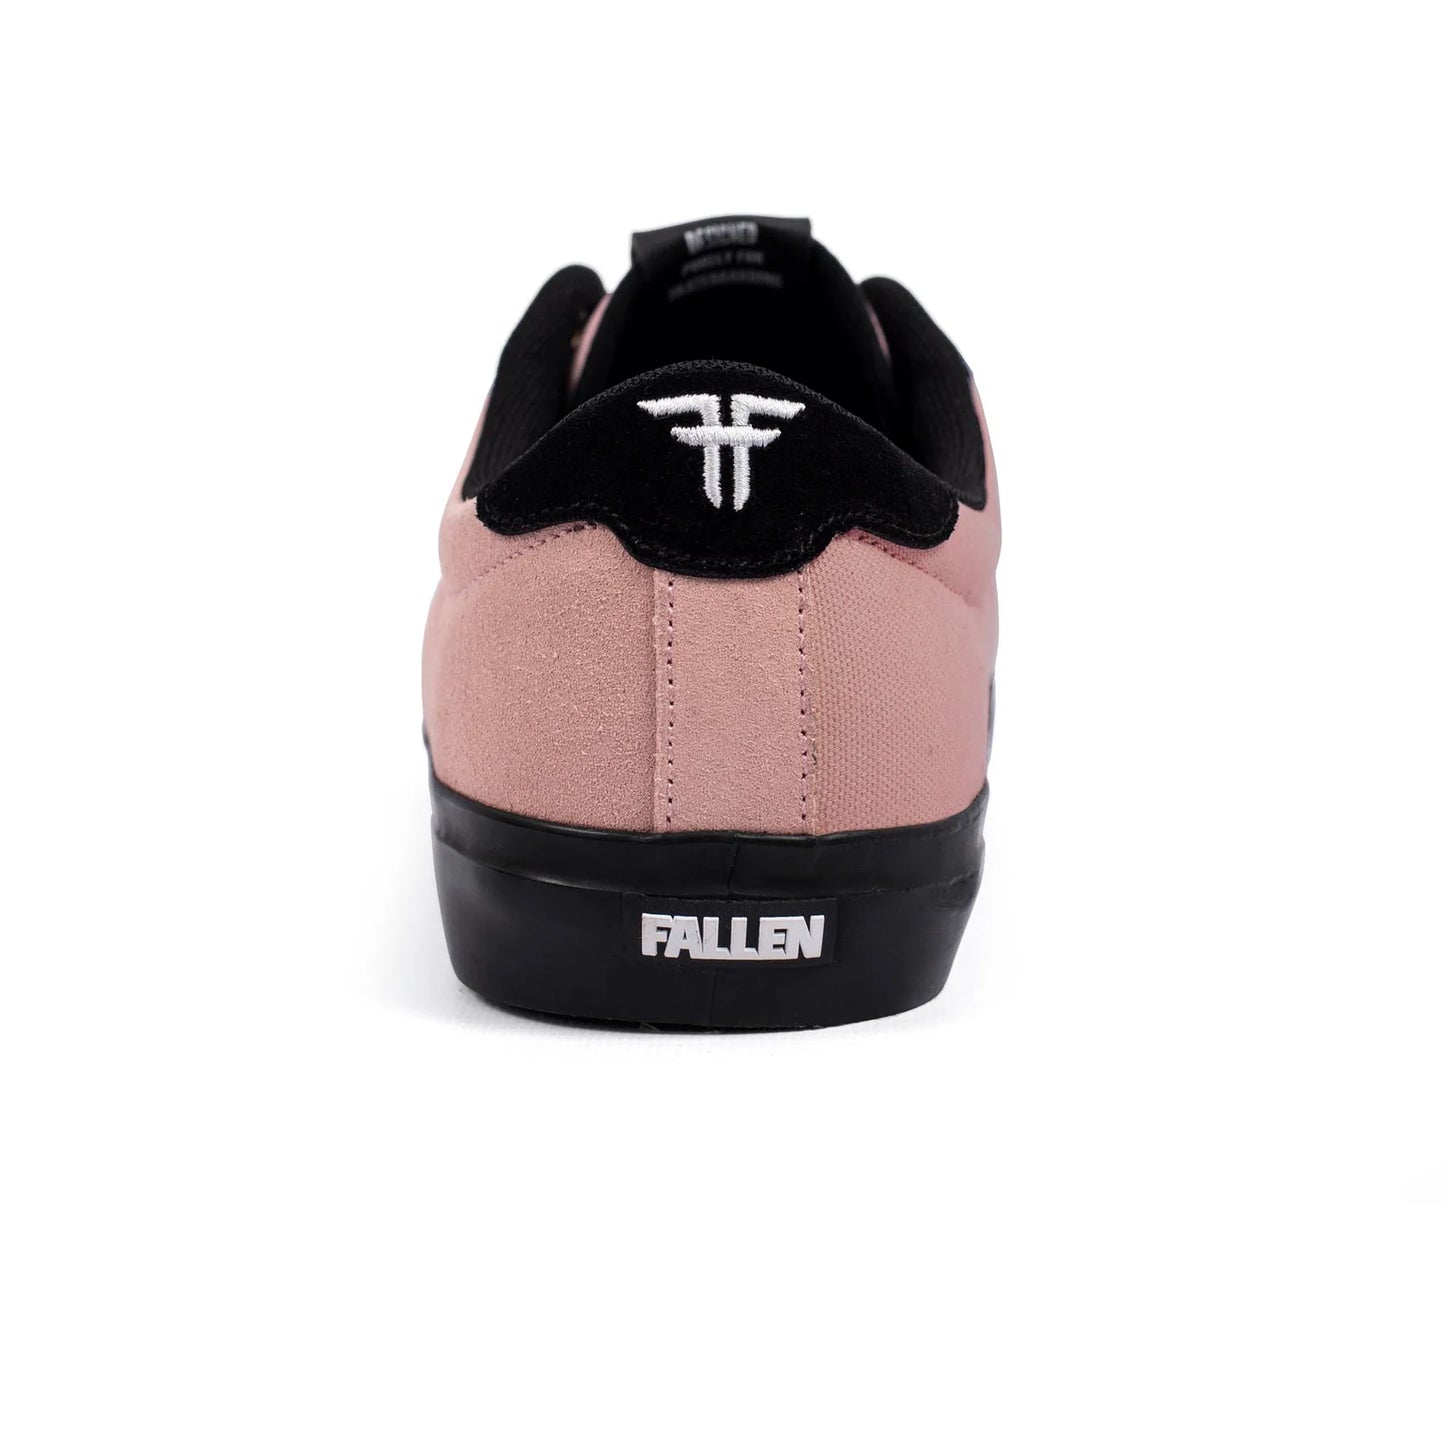 Fallen Shoes Bomber Pink/Black - Vulc